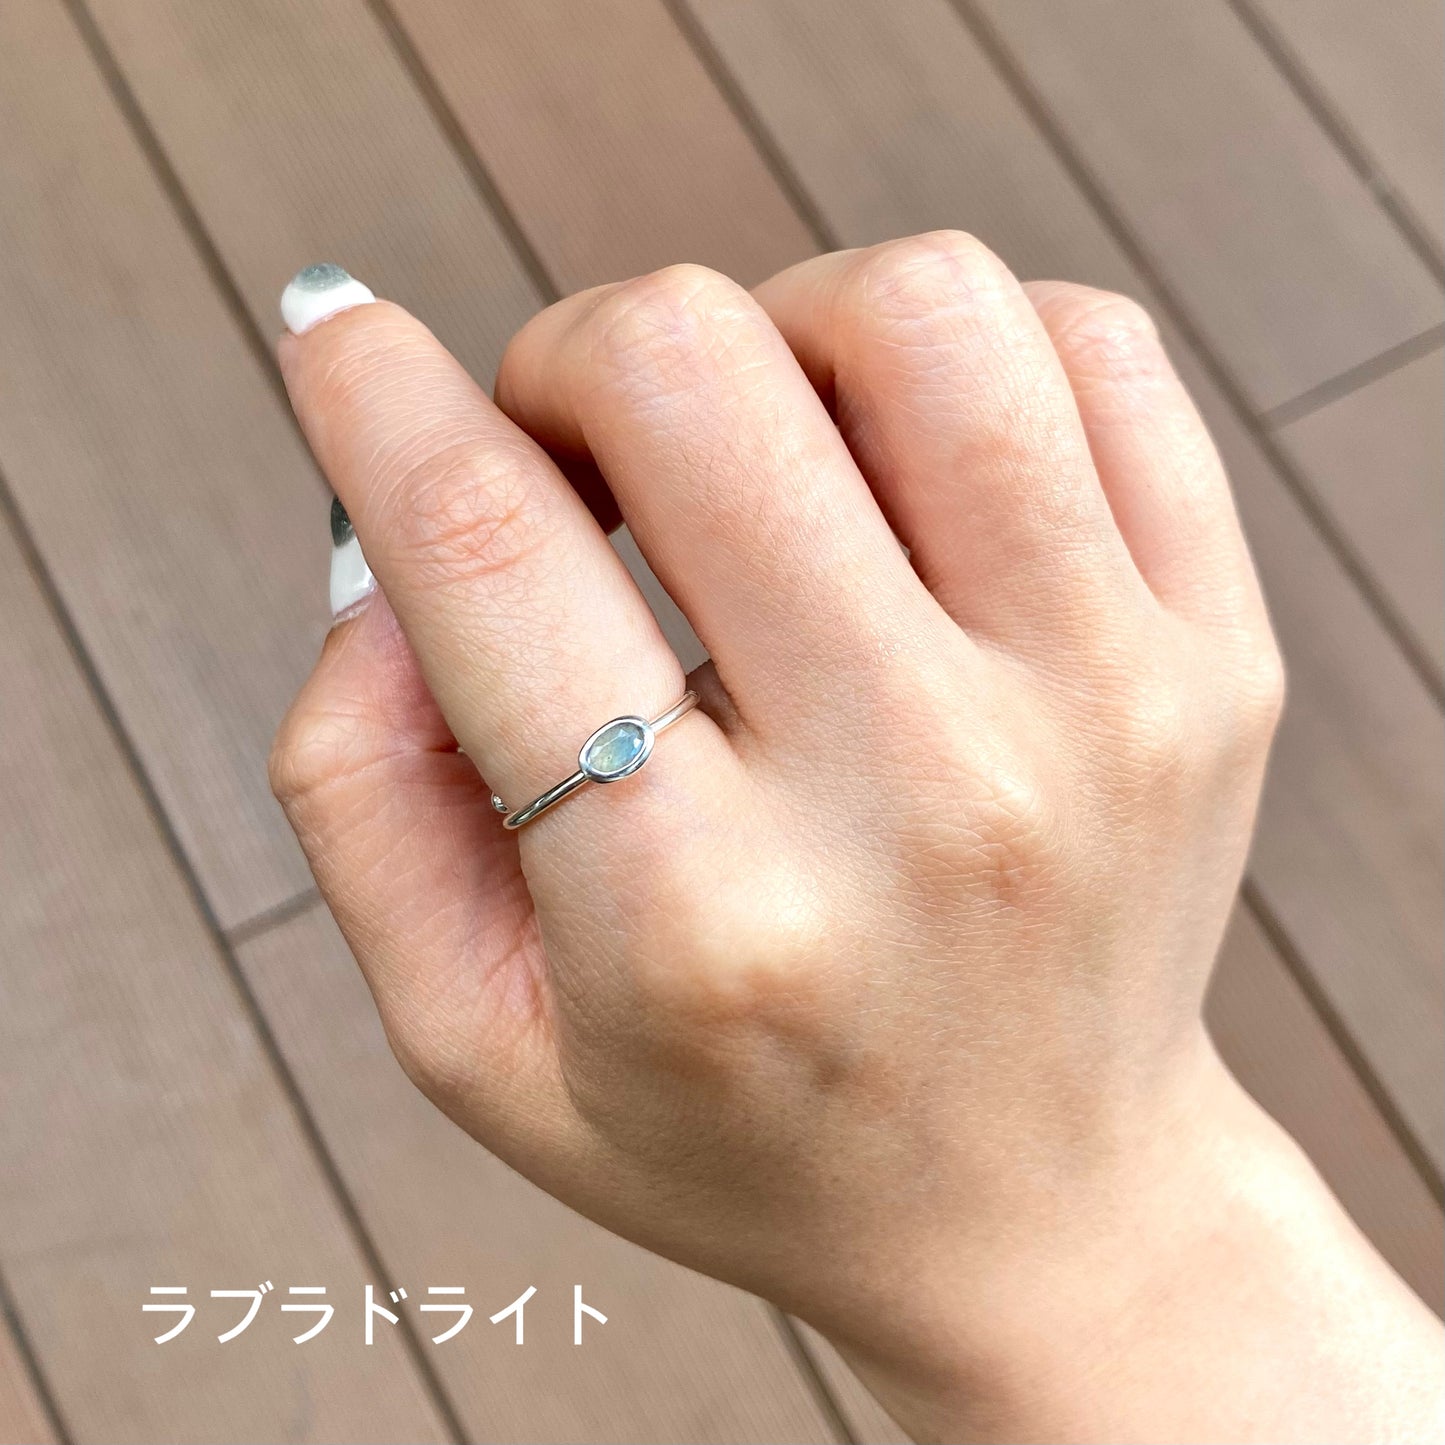 Silver925 petit ring 12